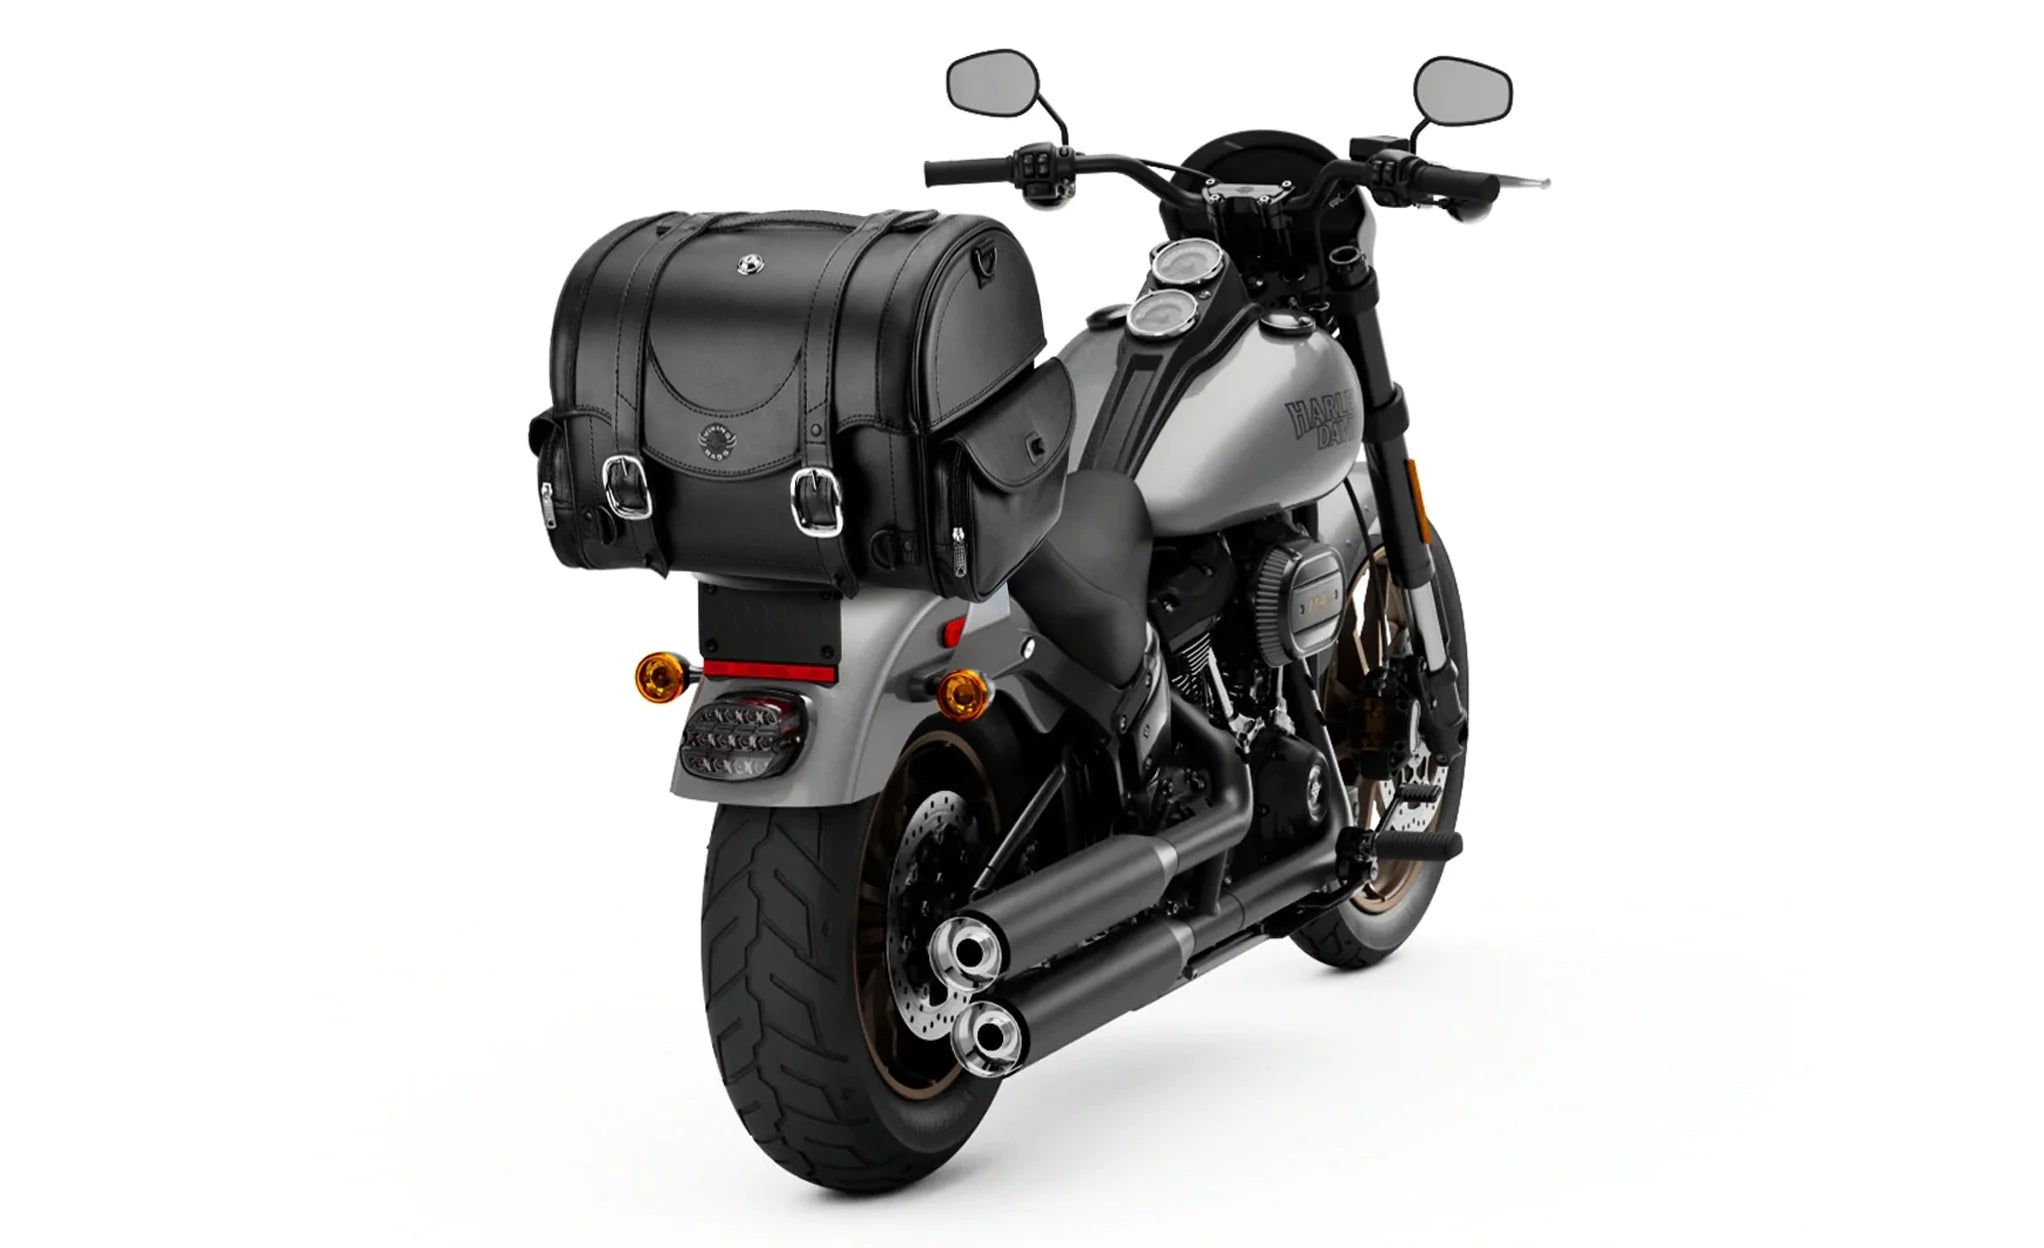 21L - Century Medium Triumph Leather Motorcycle Tail Bag on Bike Photo @expand